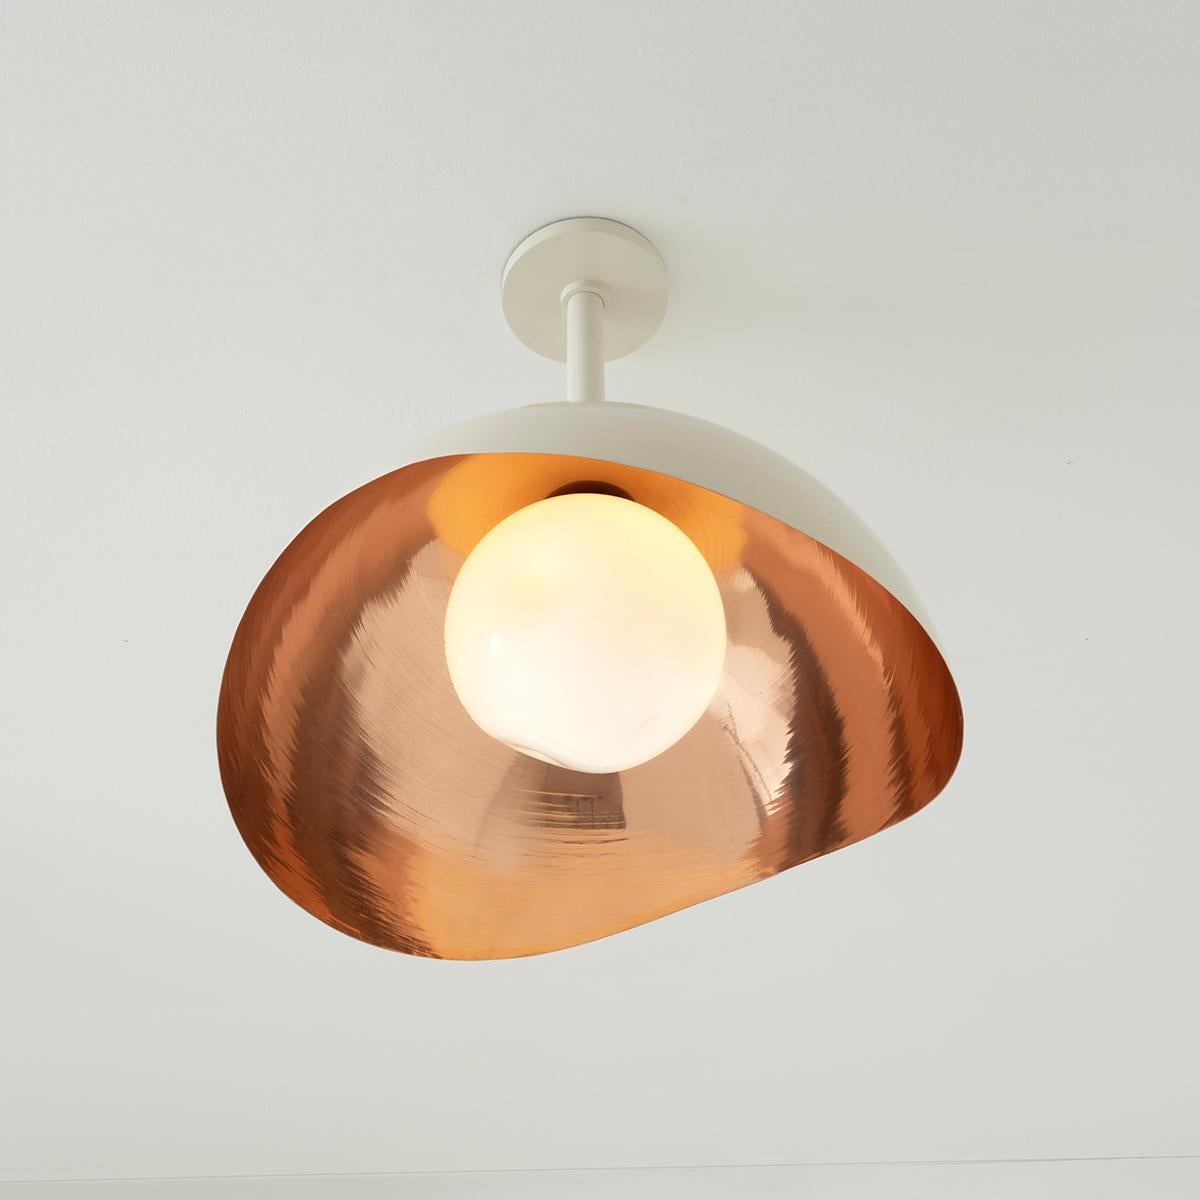 Perla Grande Ceiling Light - Copper Interior and Enamel Exterior For Sale 2